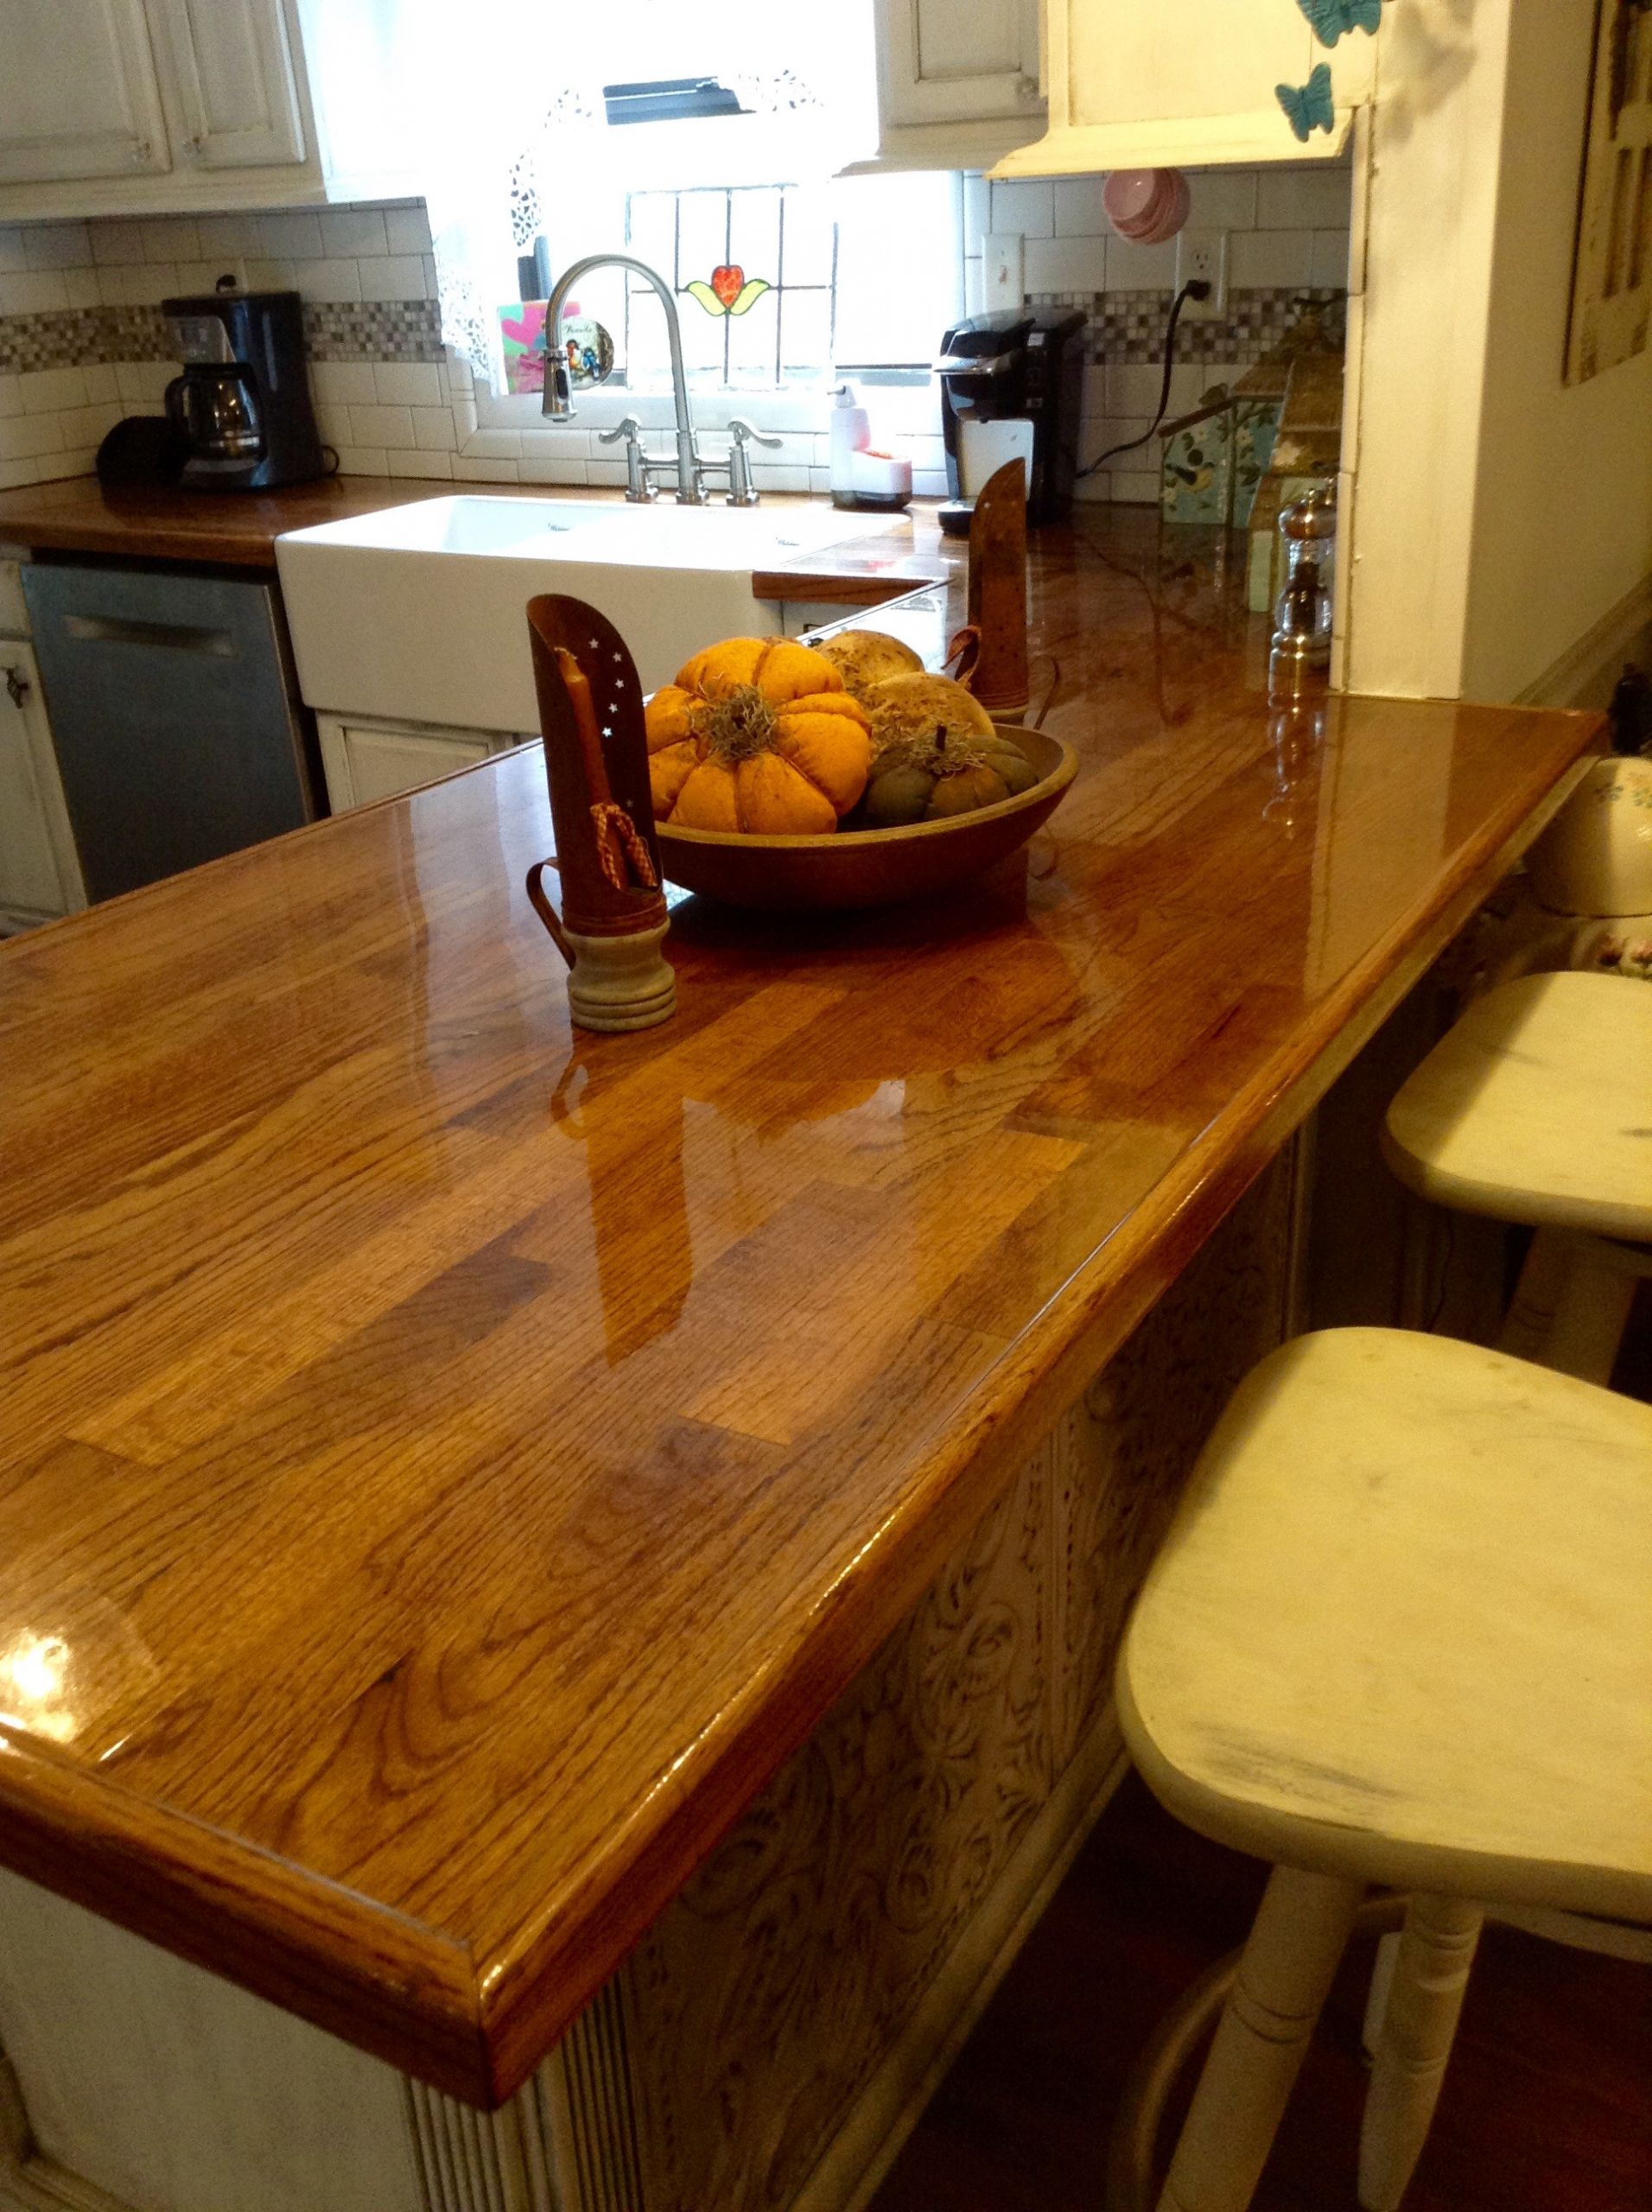 Diy Wood Kitchen Countertops
 Remodelaholic